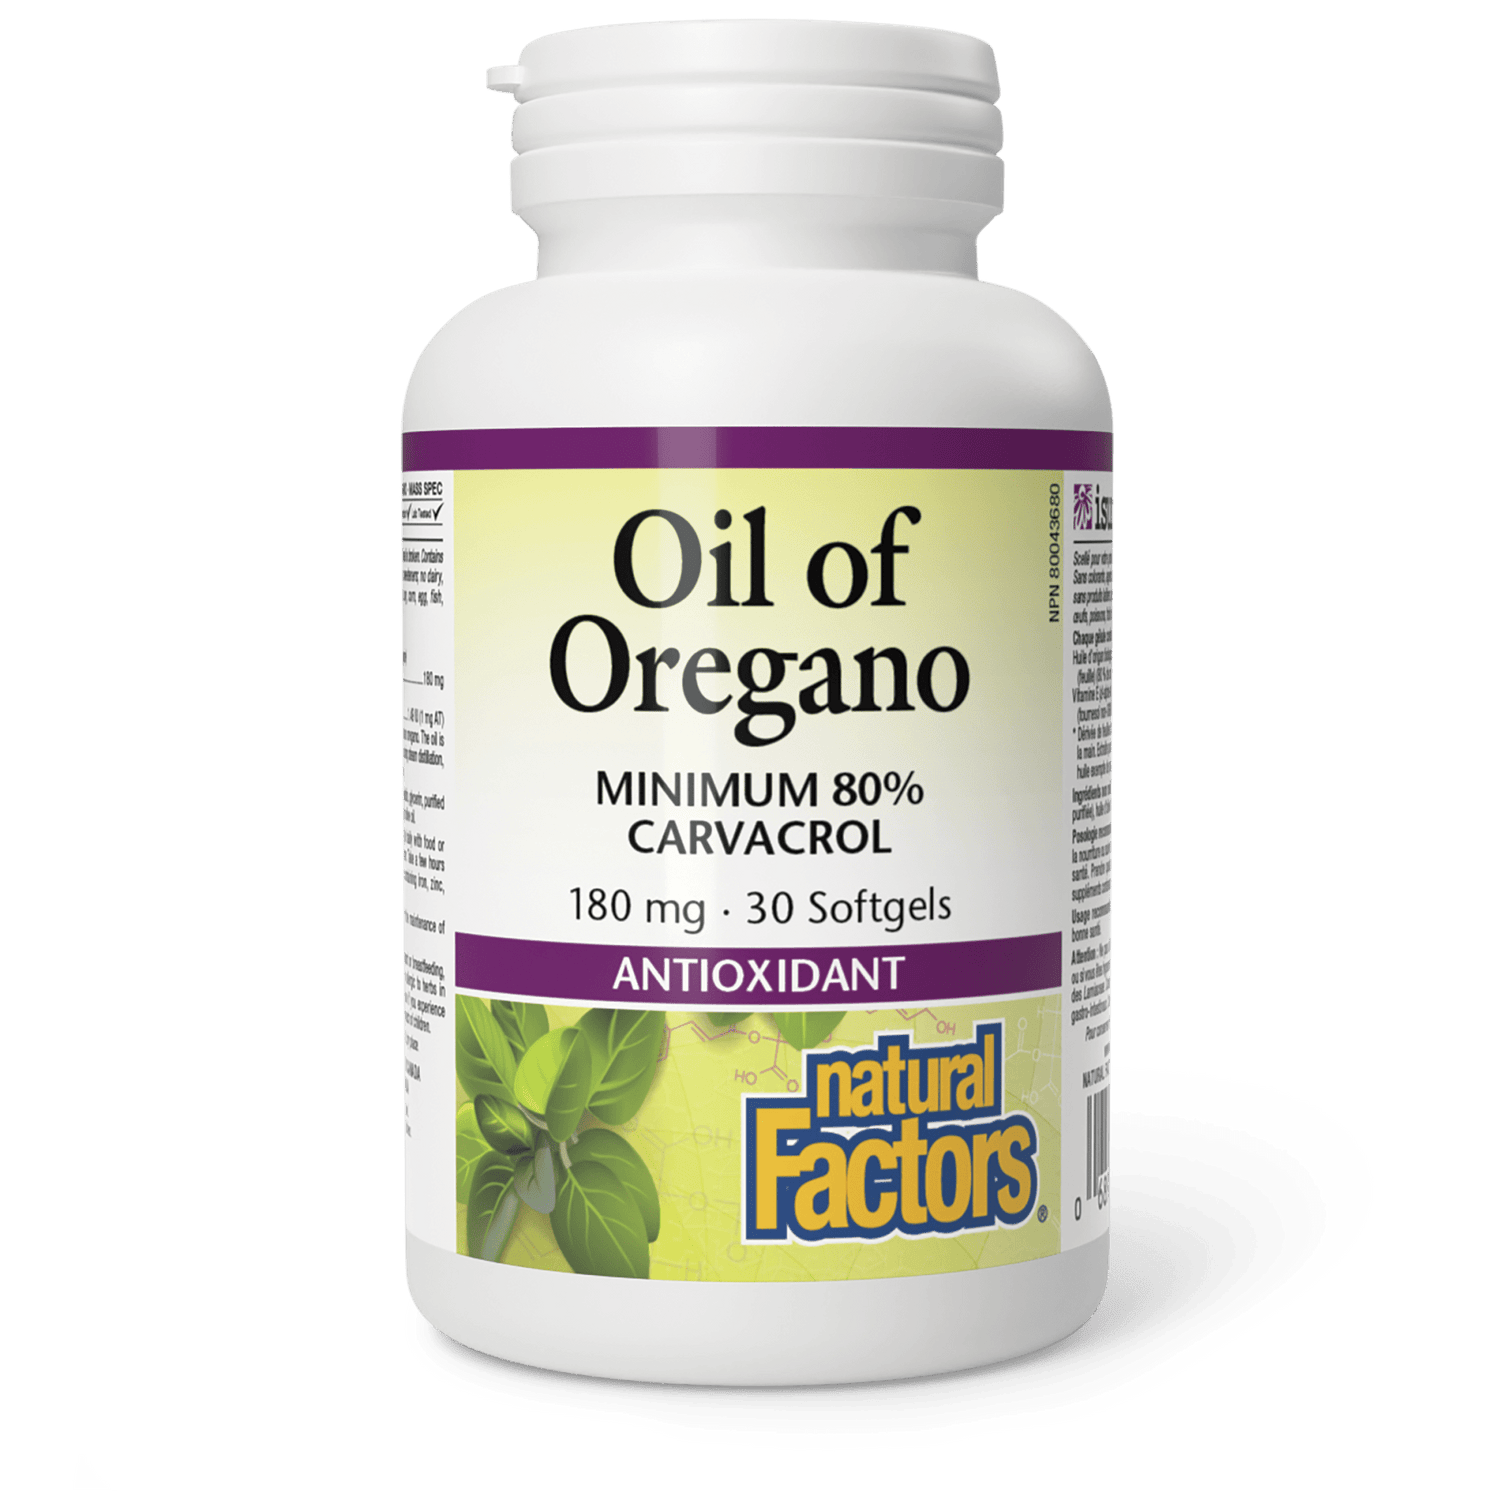 Oil of Oregano 180 mg, Natural Factors|v|image|4573